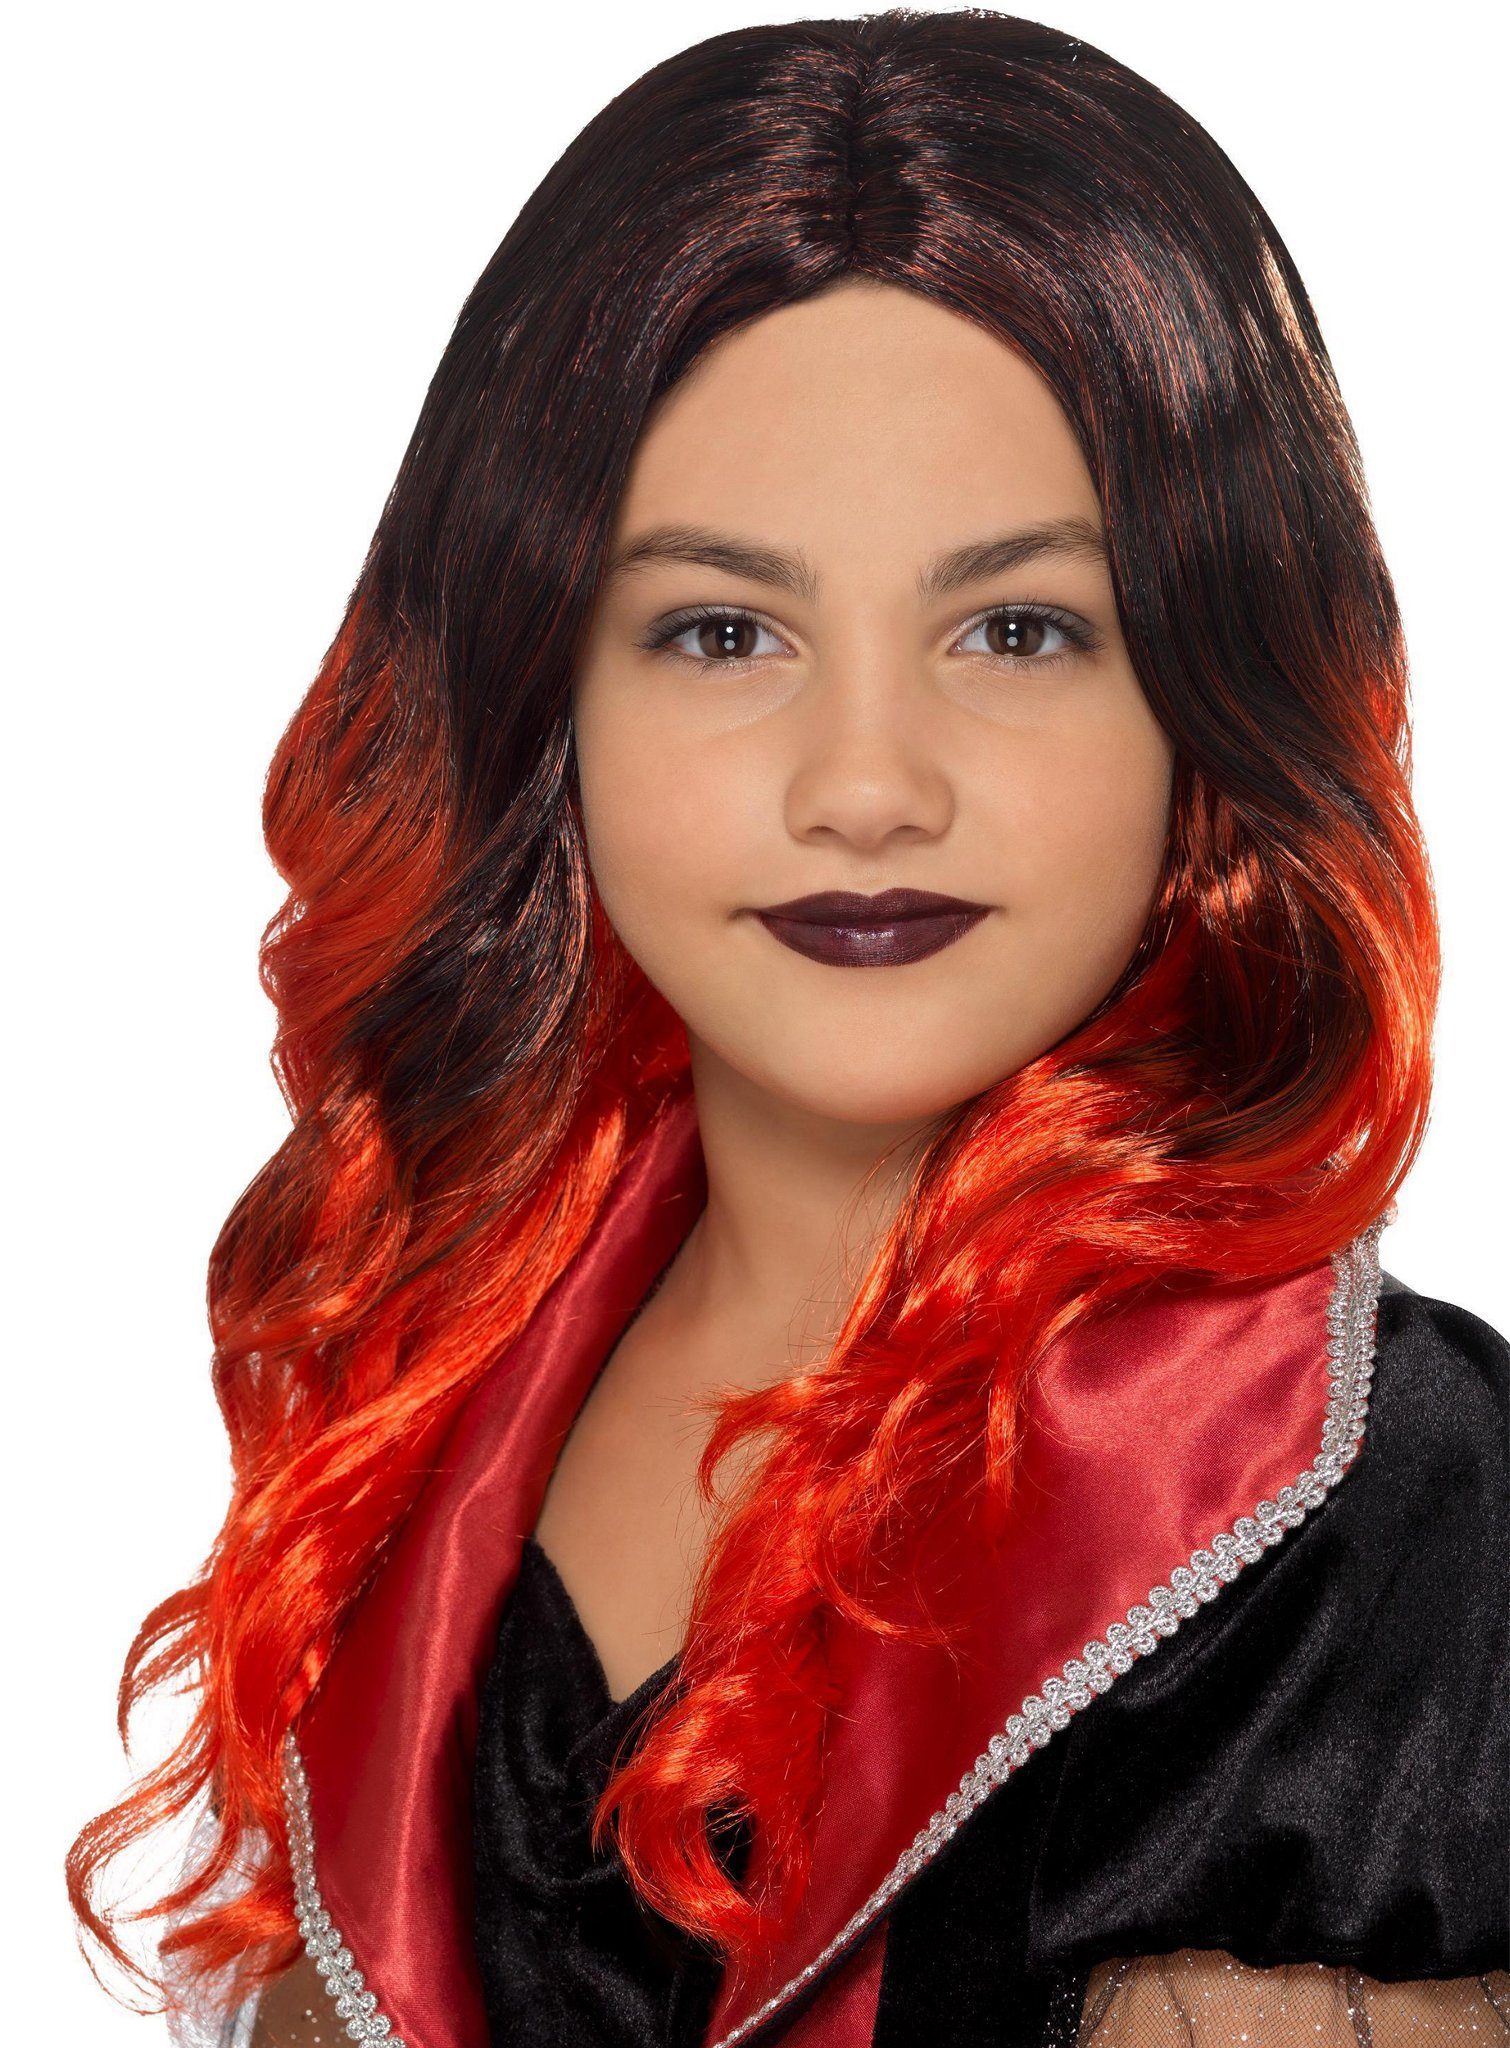 Smiffys Kostüm-Perücke Langhaar schwarz-rot, Ombré Hair-Perücke mit zweifarbigem Farbverlauf